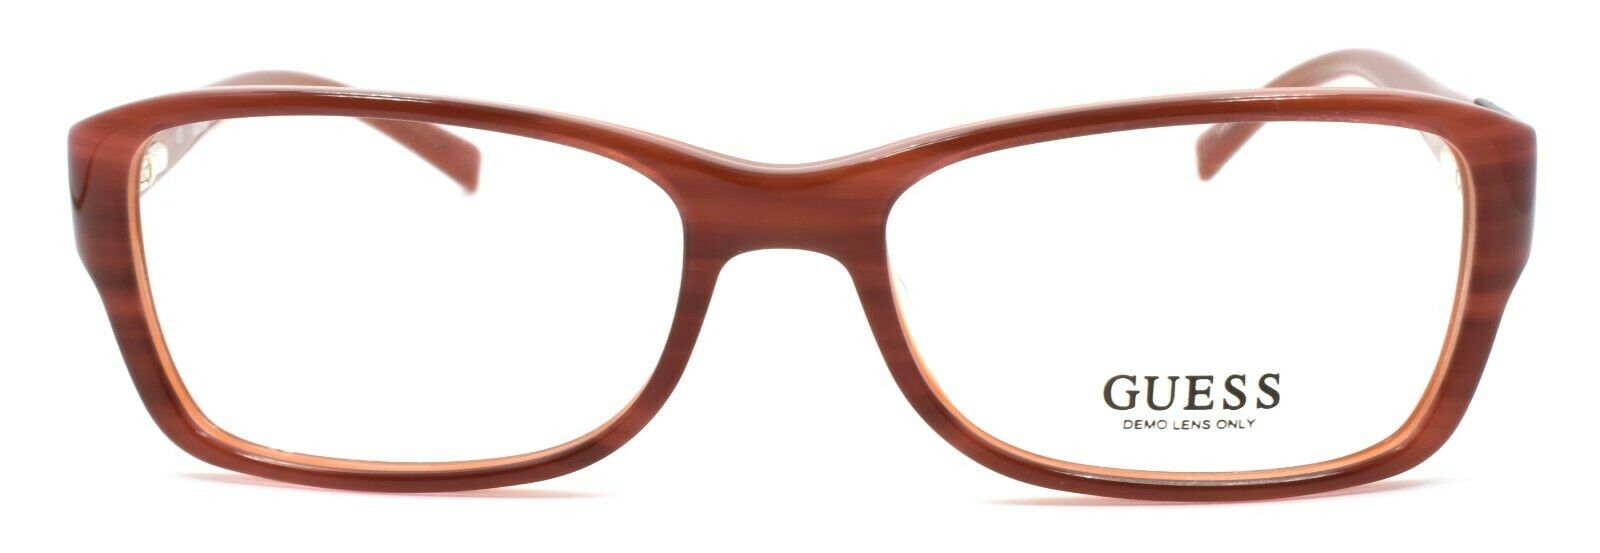 2-GUESS GU2274 BU Women's Eyeglasses Frames 52-16-135 Bordeaux-715583416154-IKSpecs